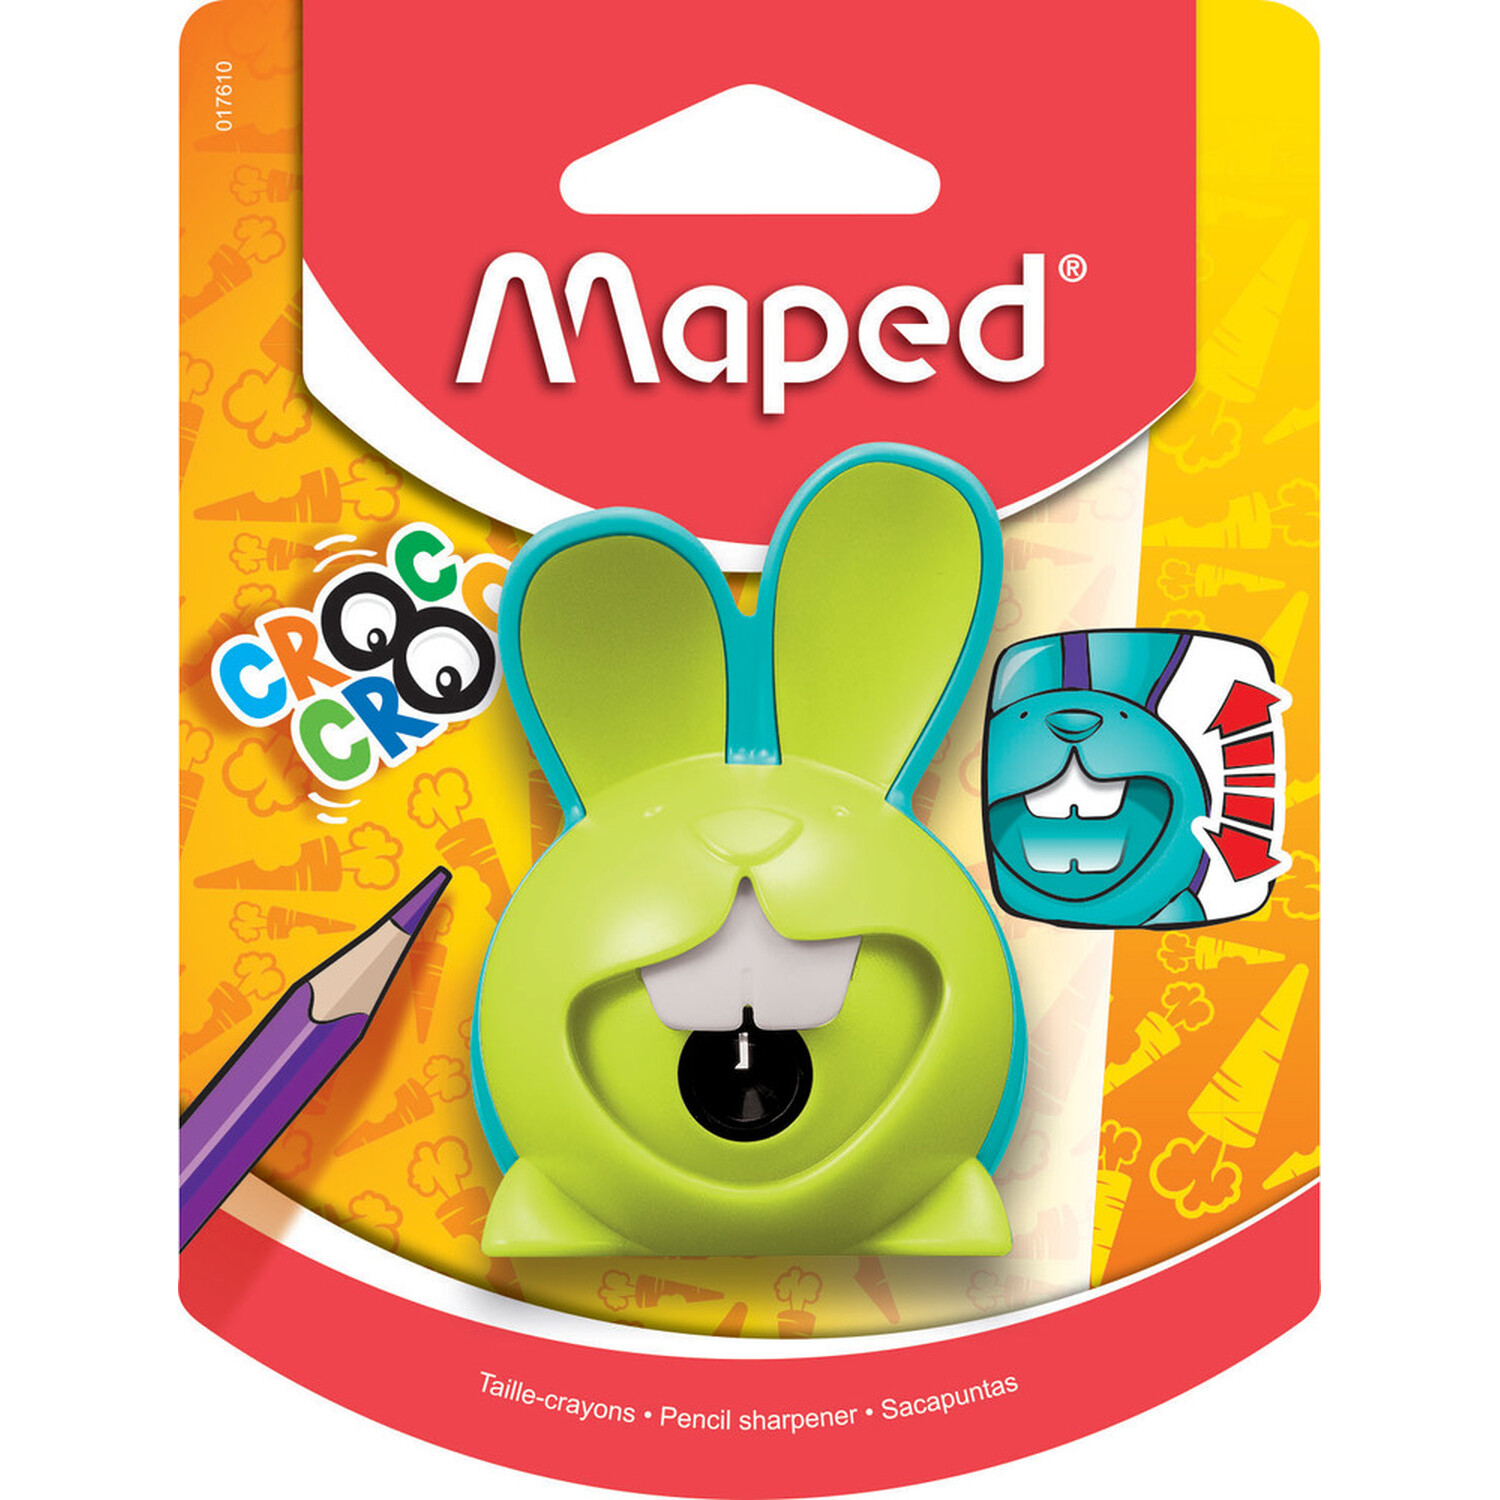 Maped Bunny Pencil Sharpener Image 2